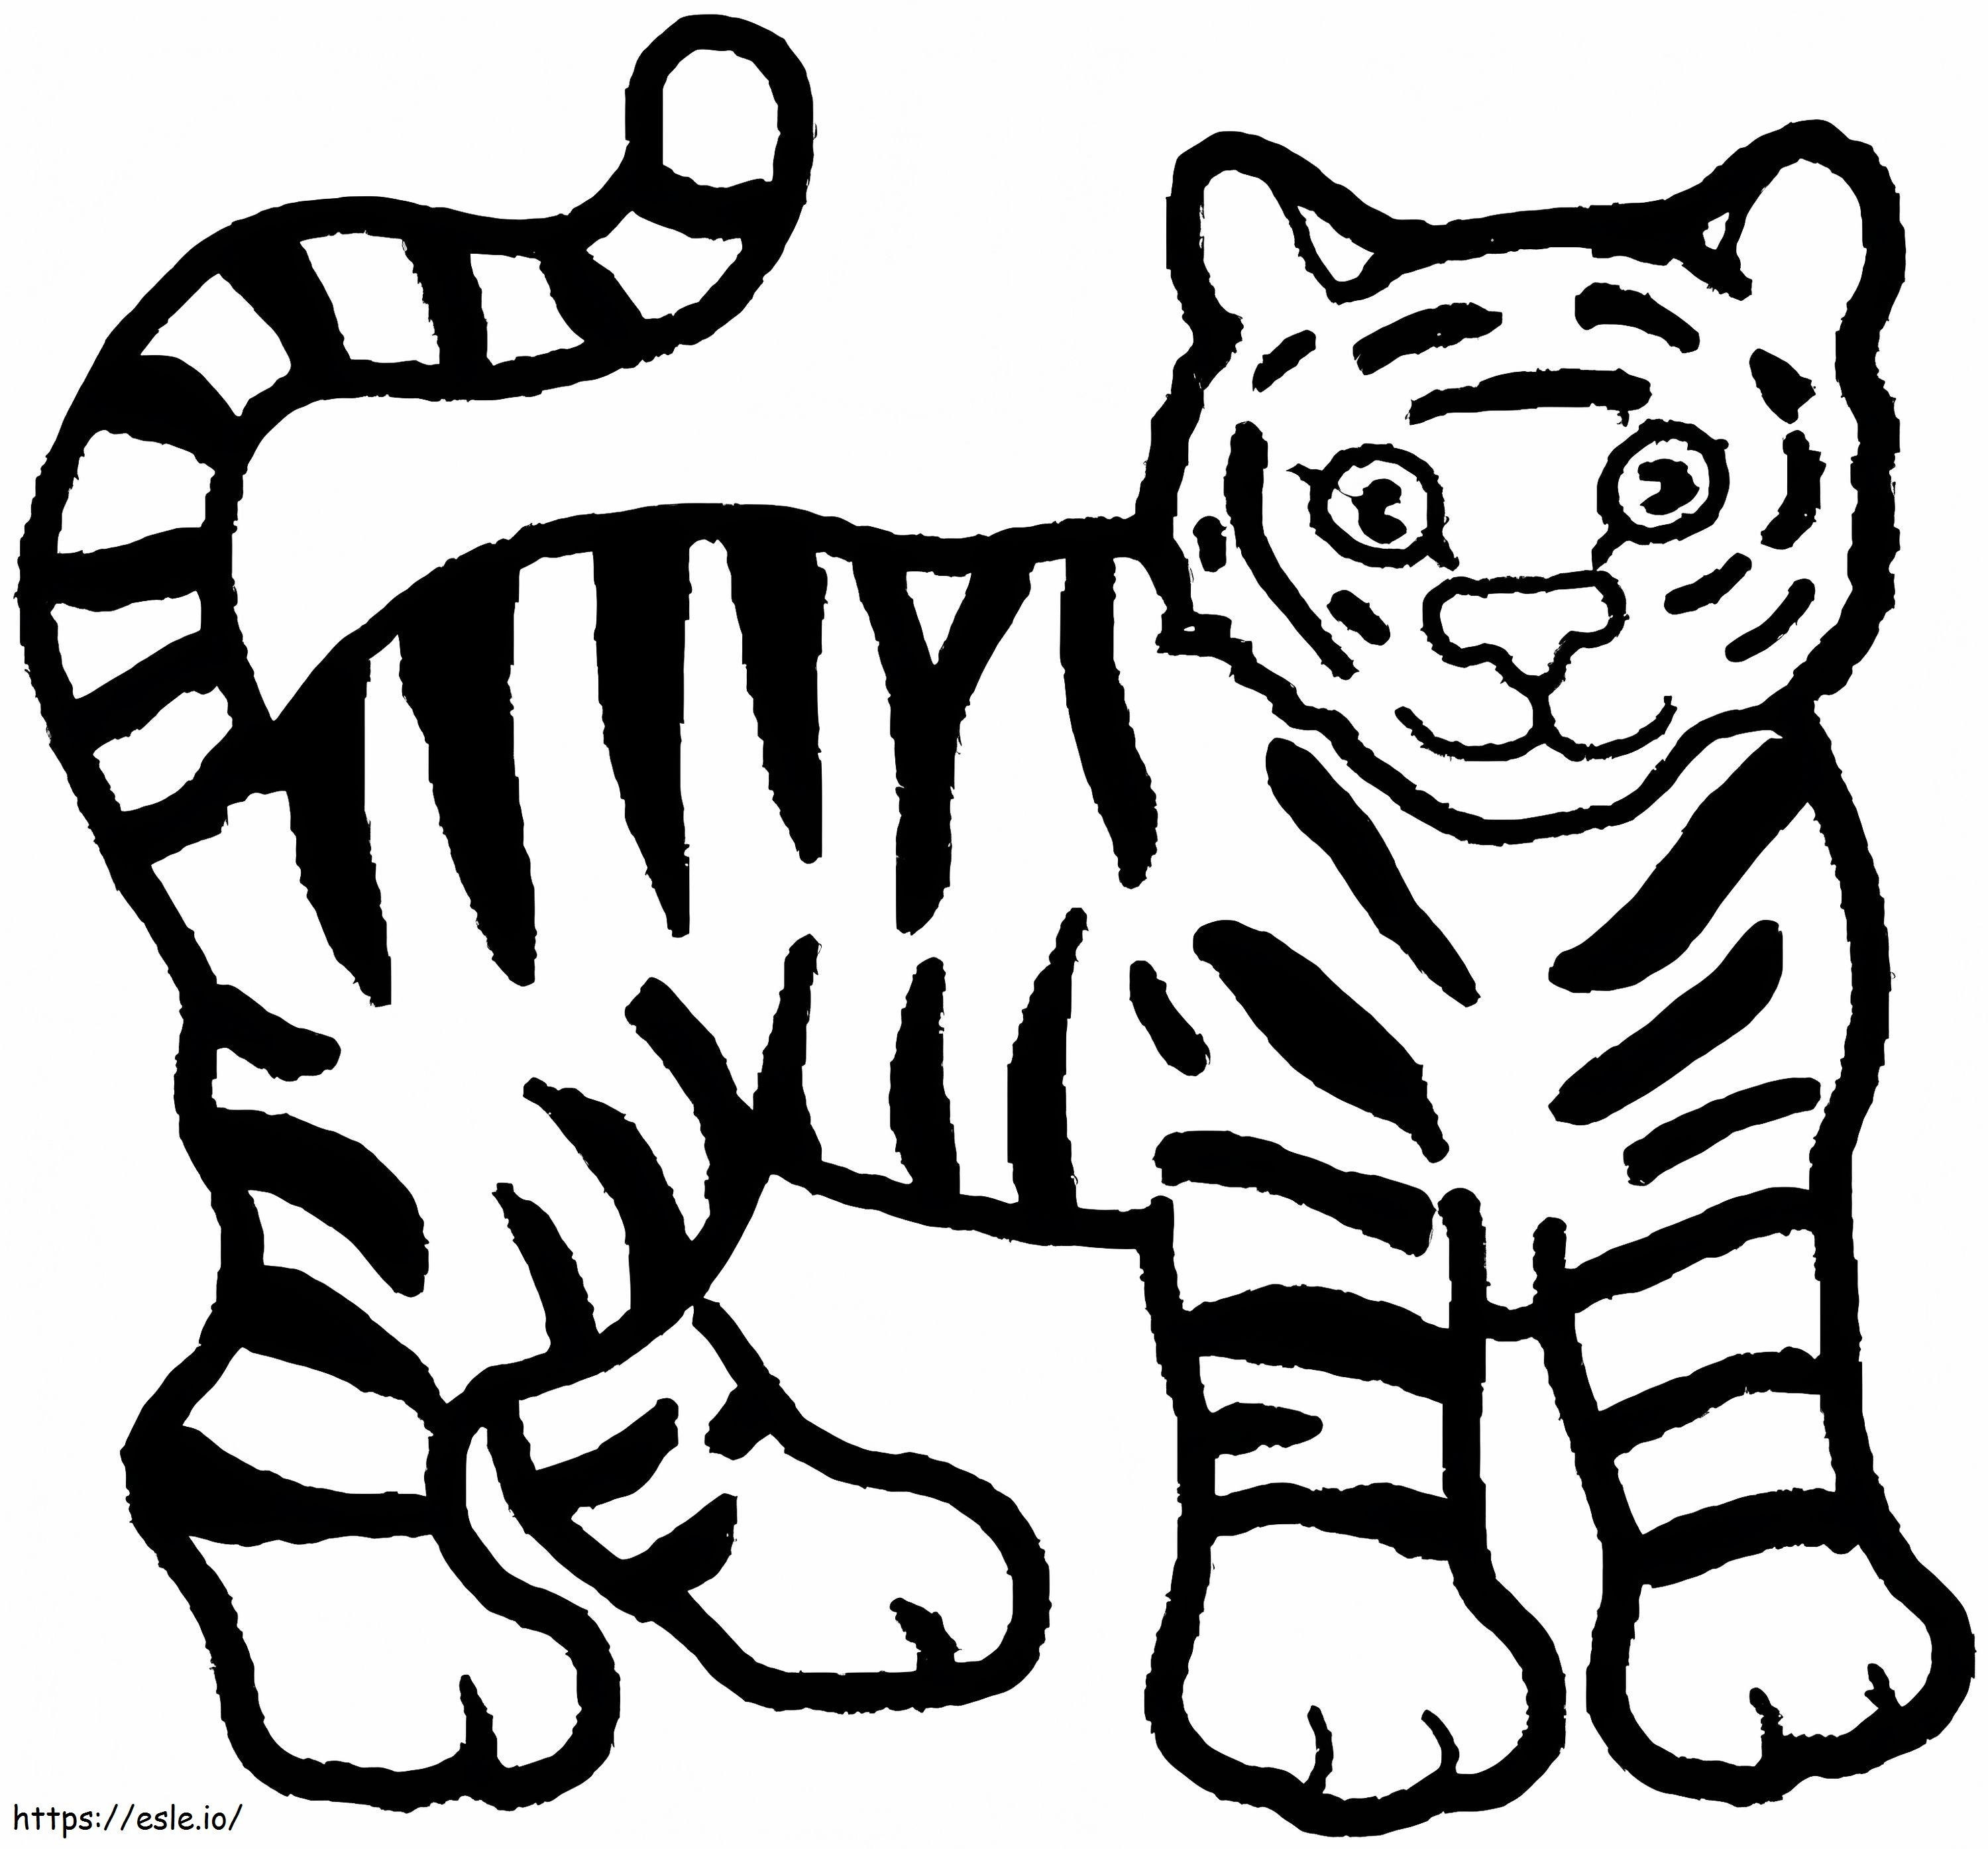 Tiger Printable coloring page